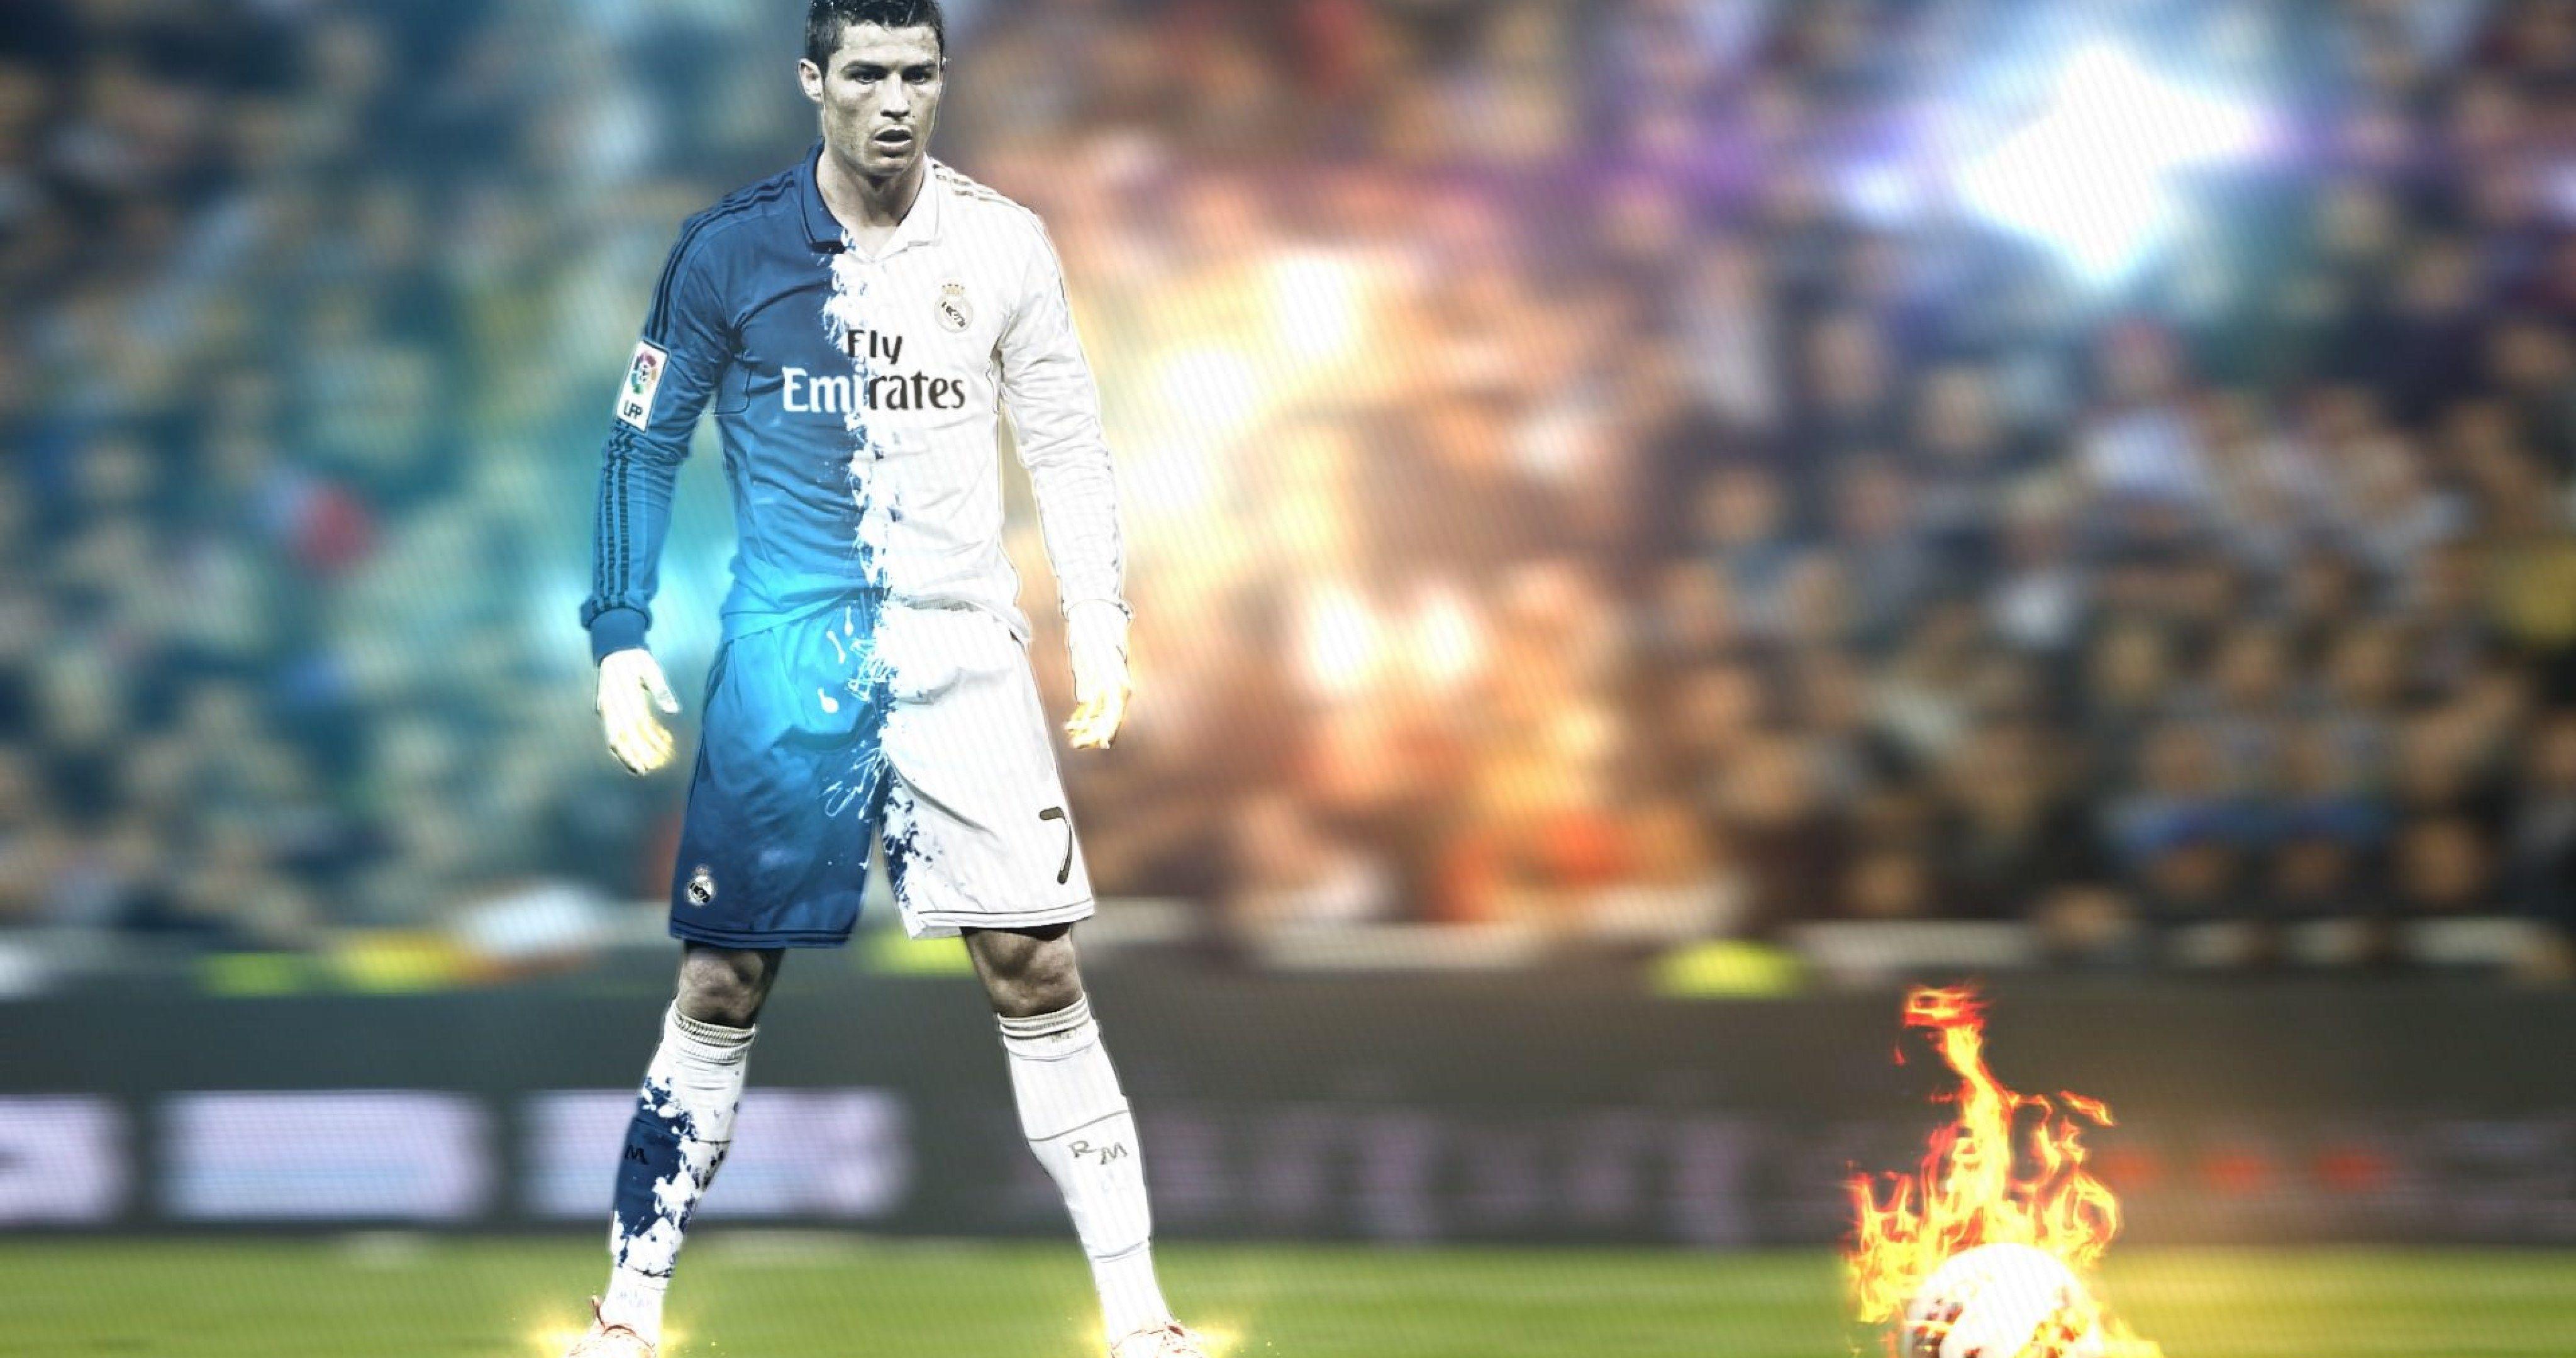 Fly Emirates Cristiano Ronaldo 4k Ultra HD Wallpaper